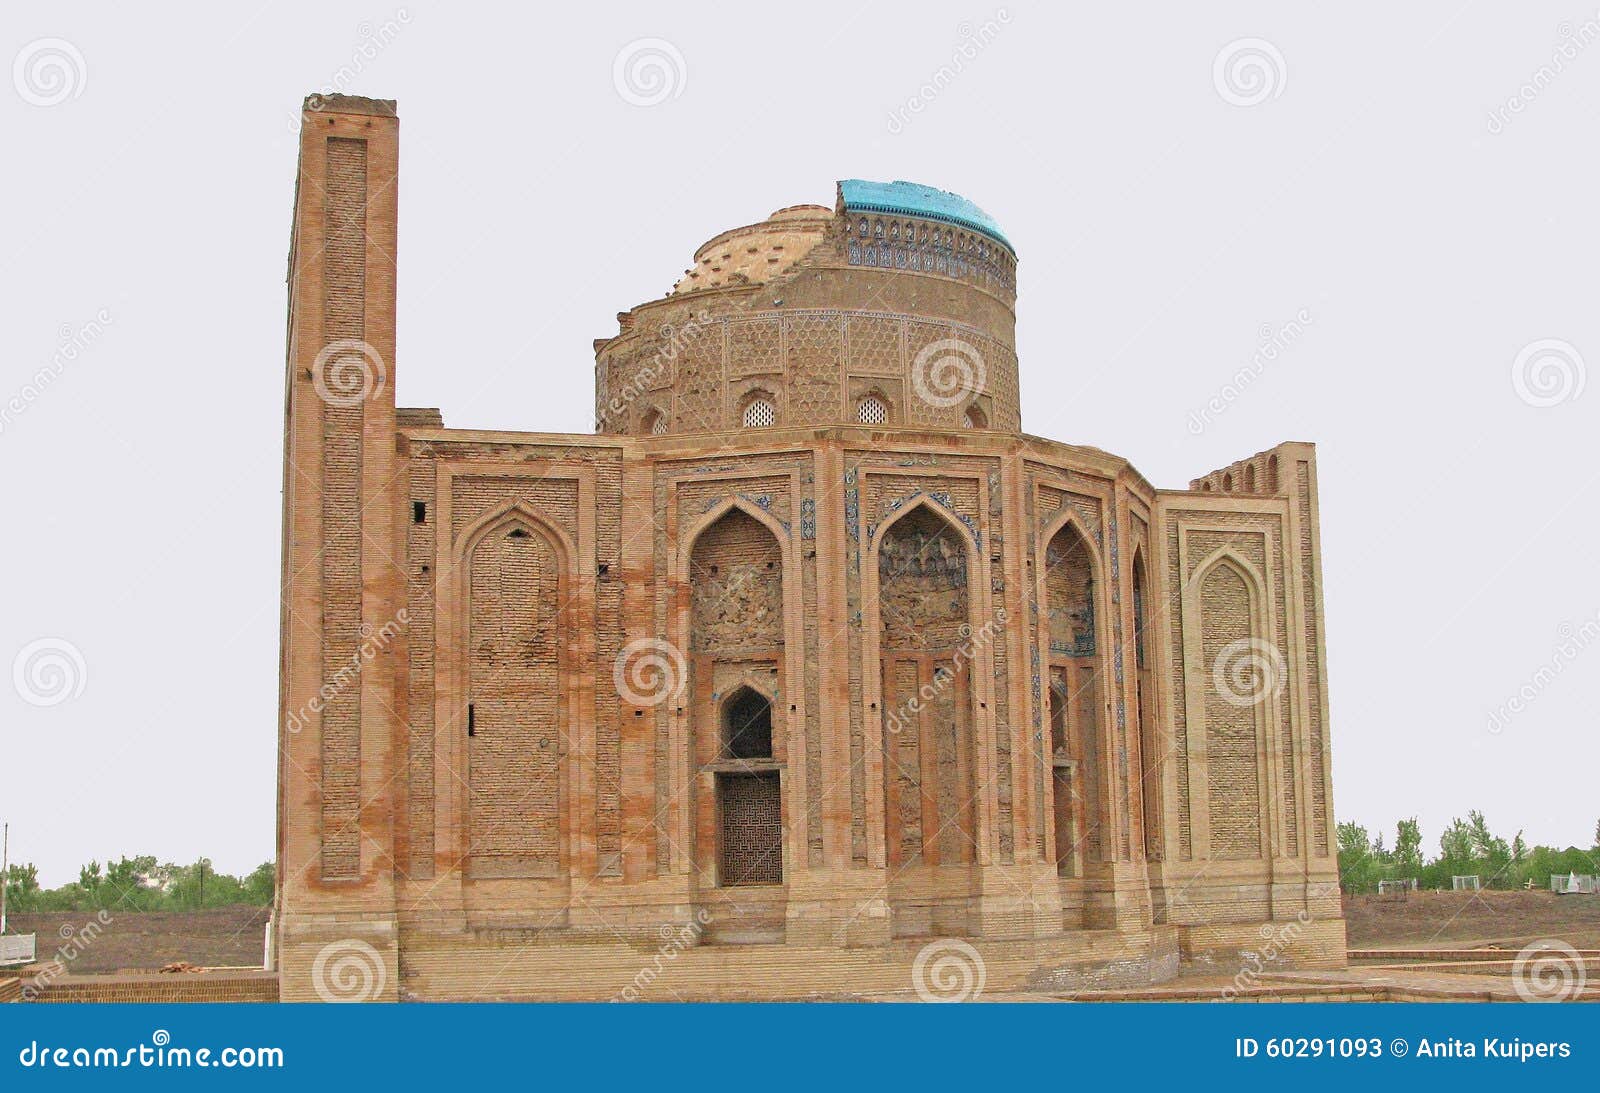 rebuilt turabek-khanym mausoleum in ancient city kunya-urgench